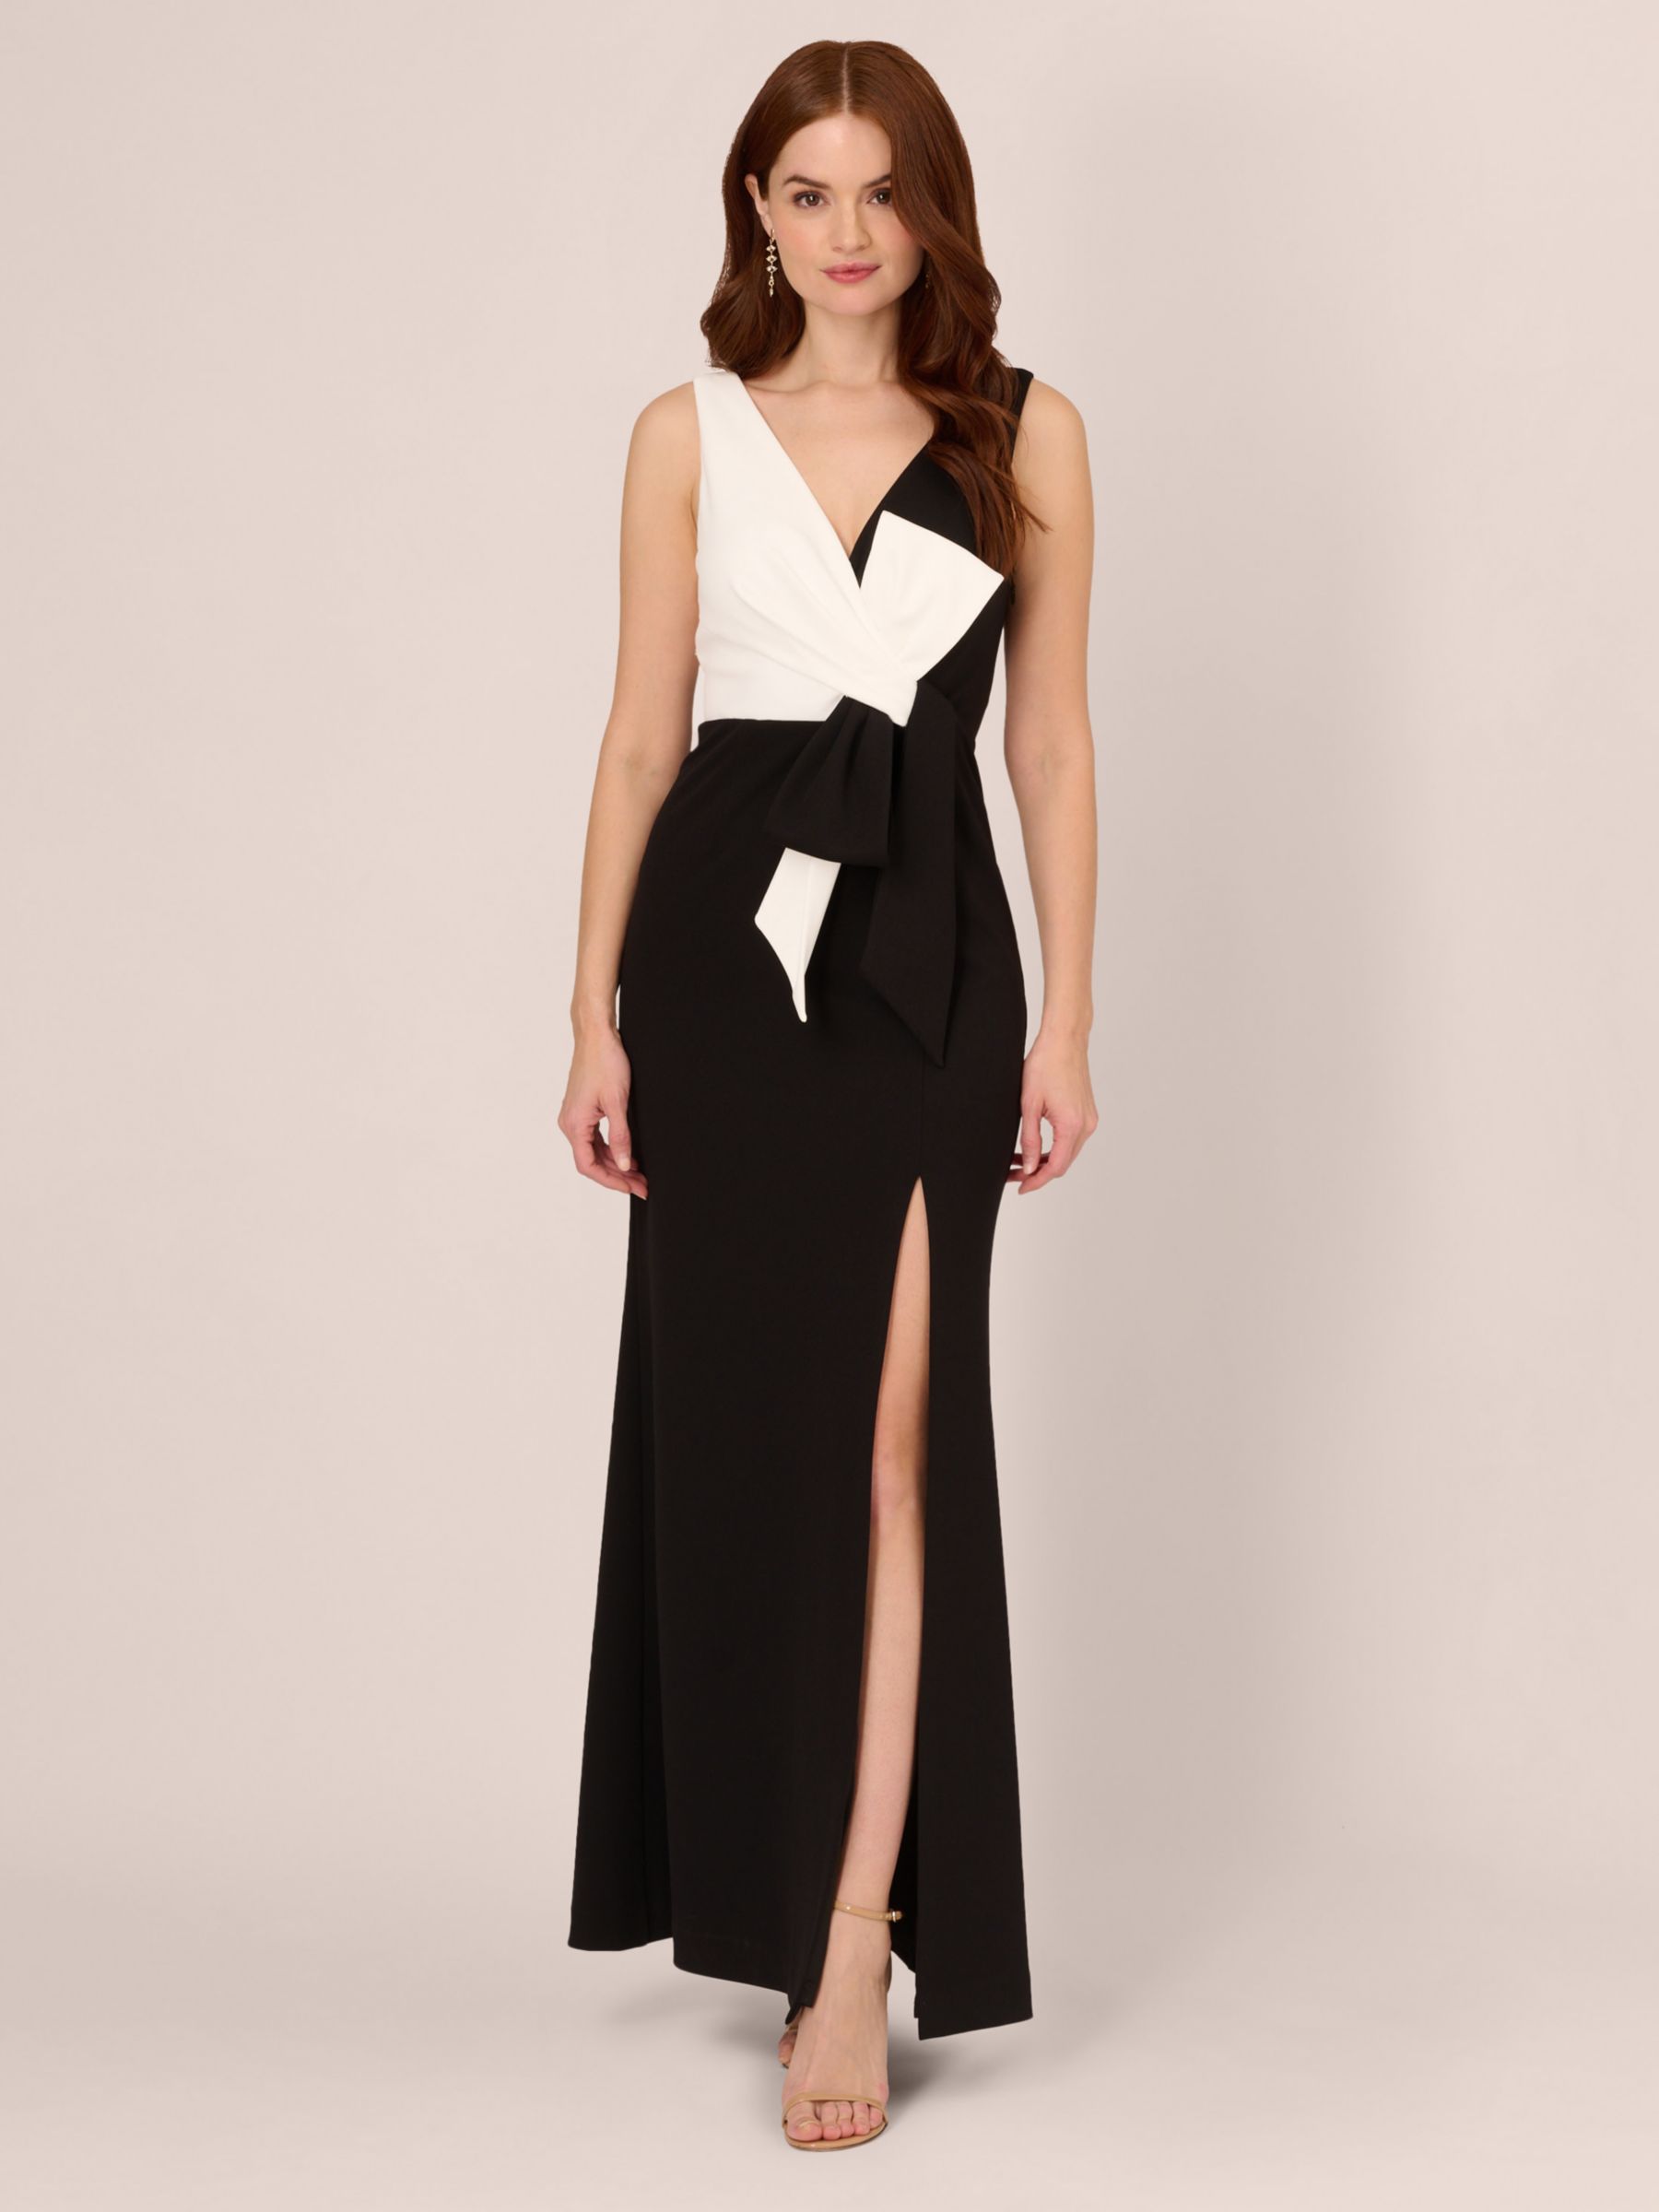 Adrianna Papell Colour Block Maxi Dress, Black/Ivory, 22